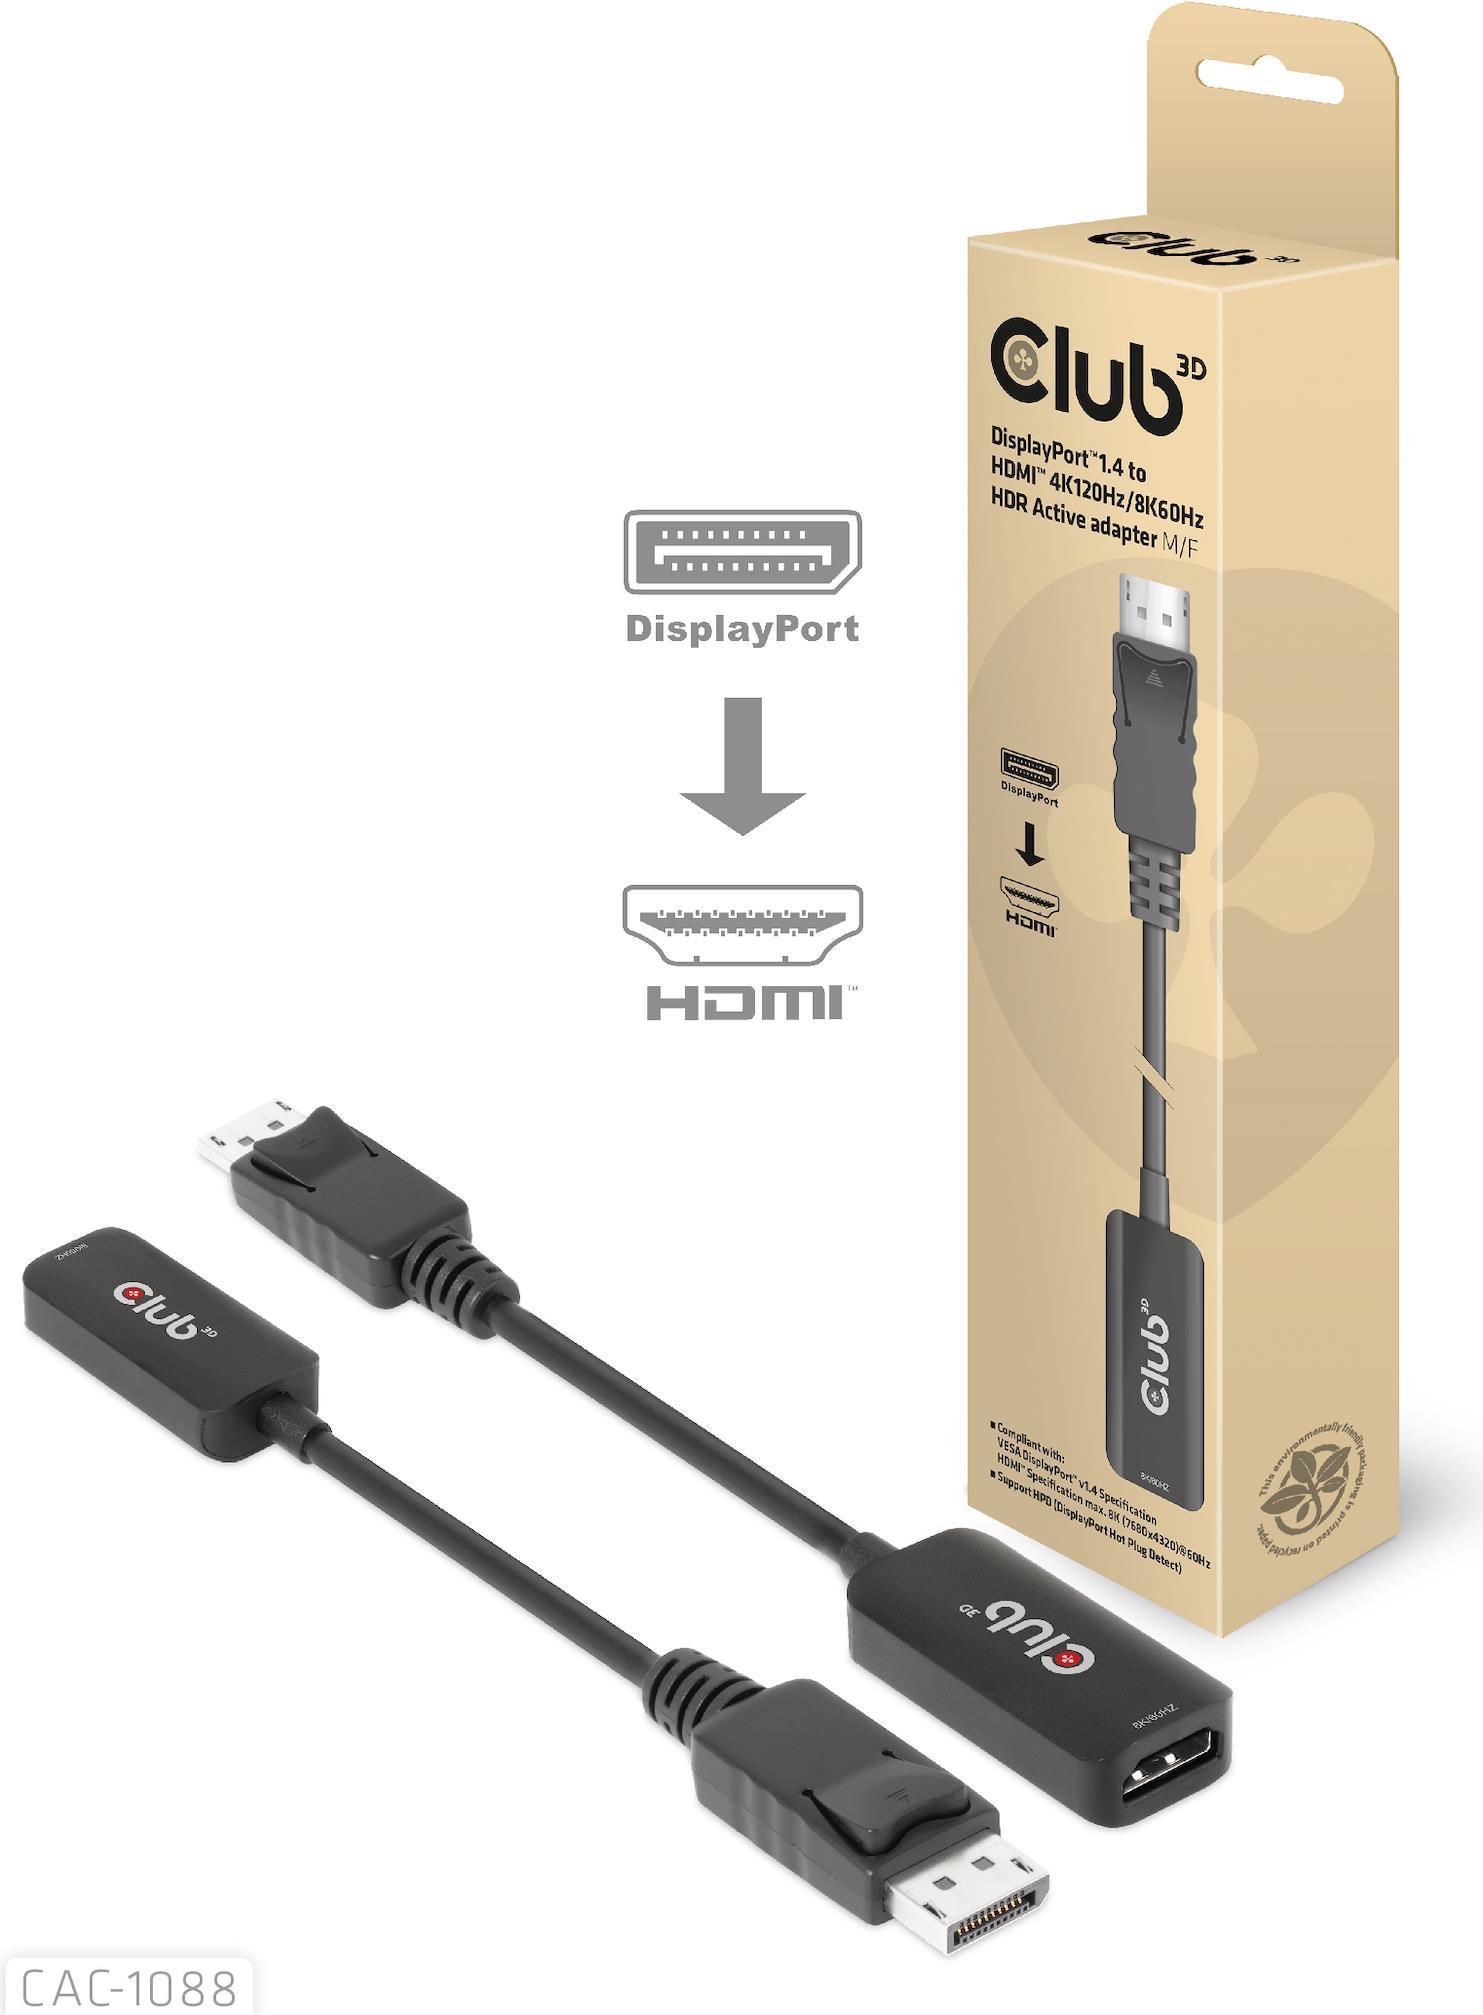 Club 3D Videoadapter (CAC-1088)